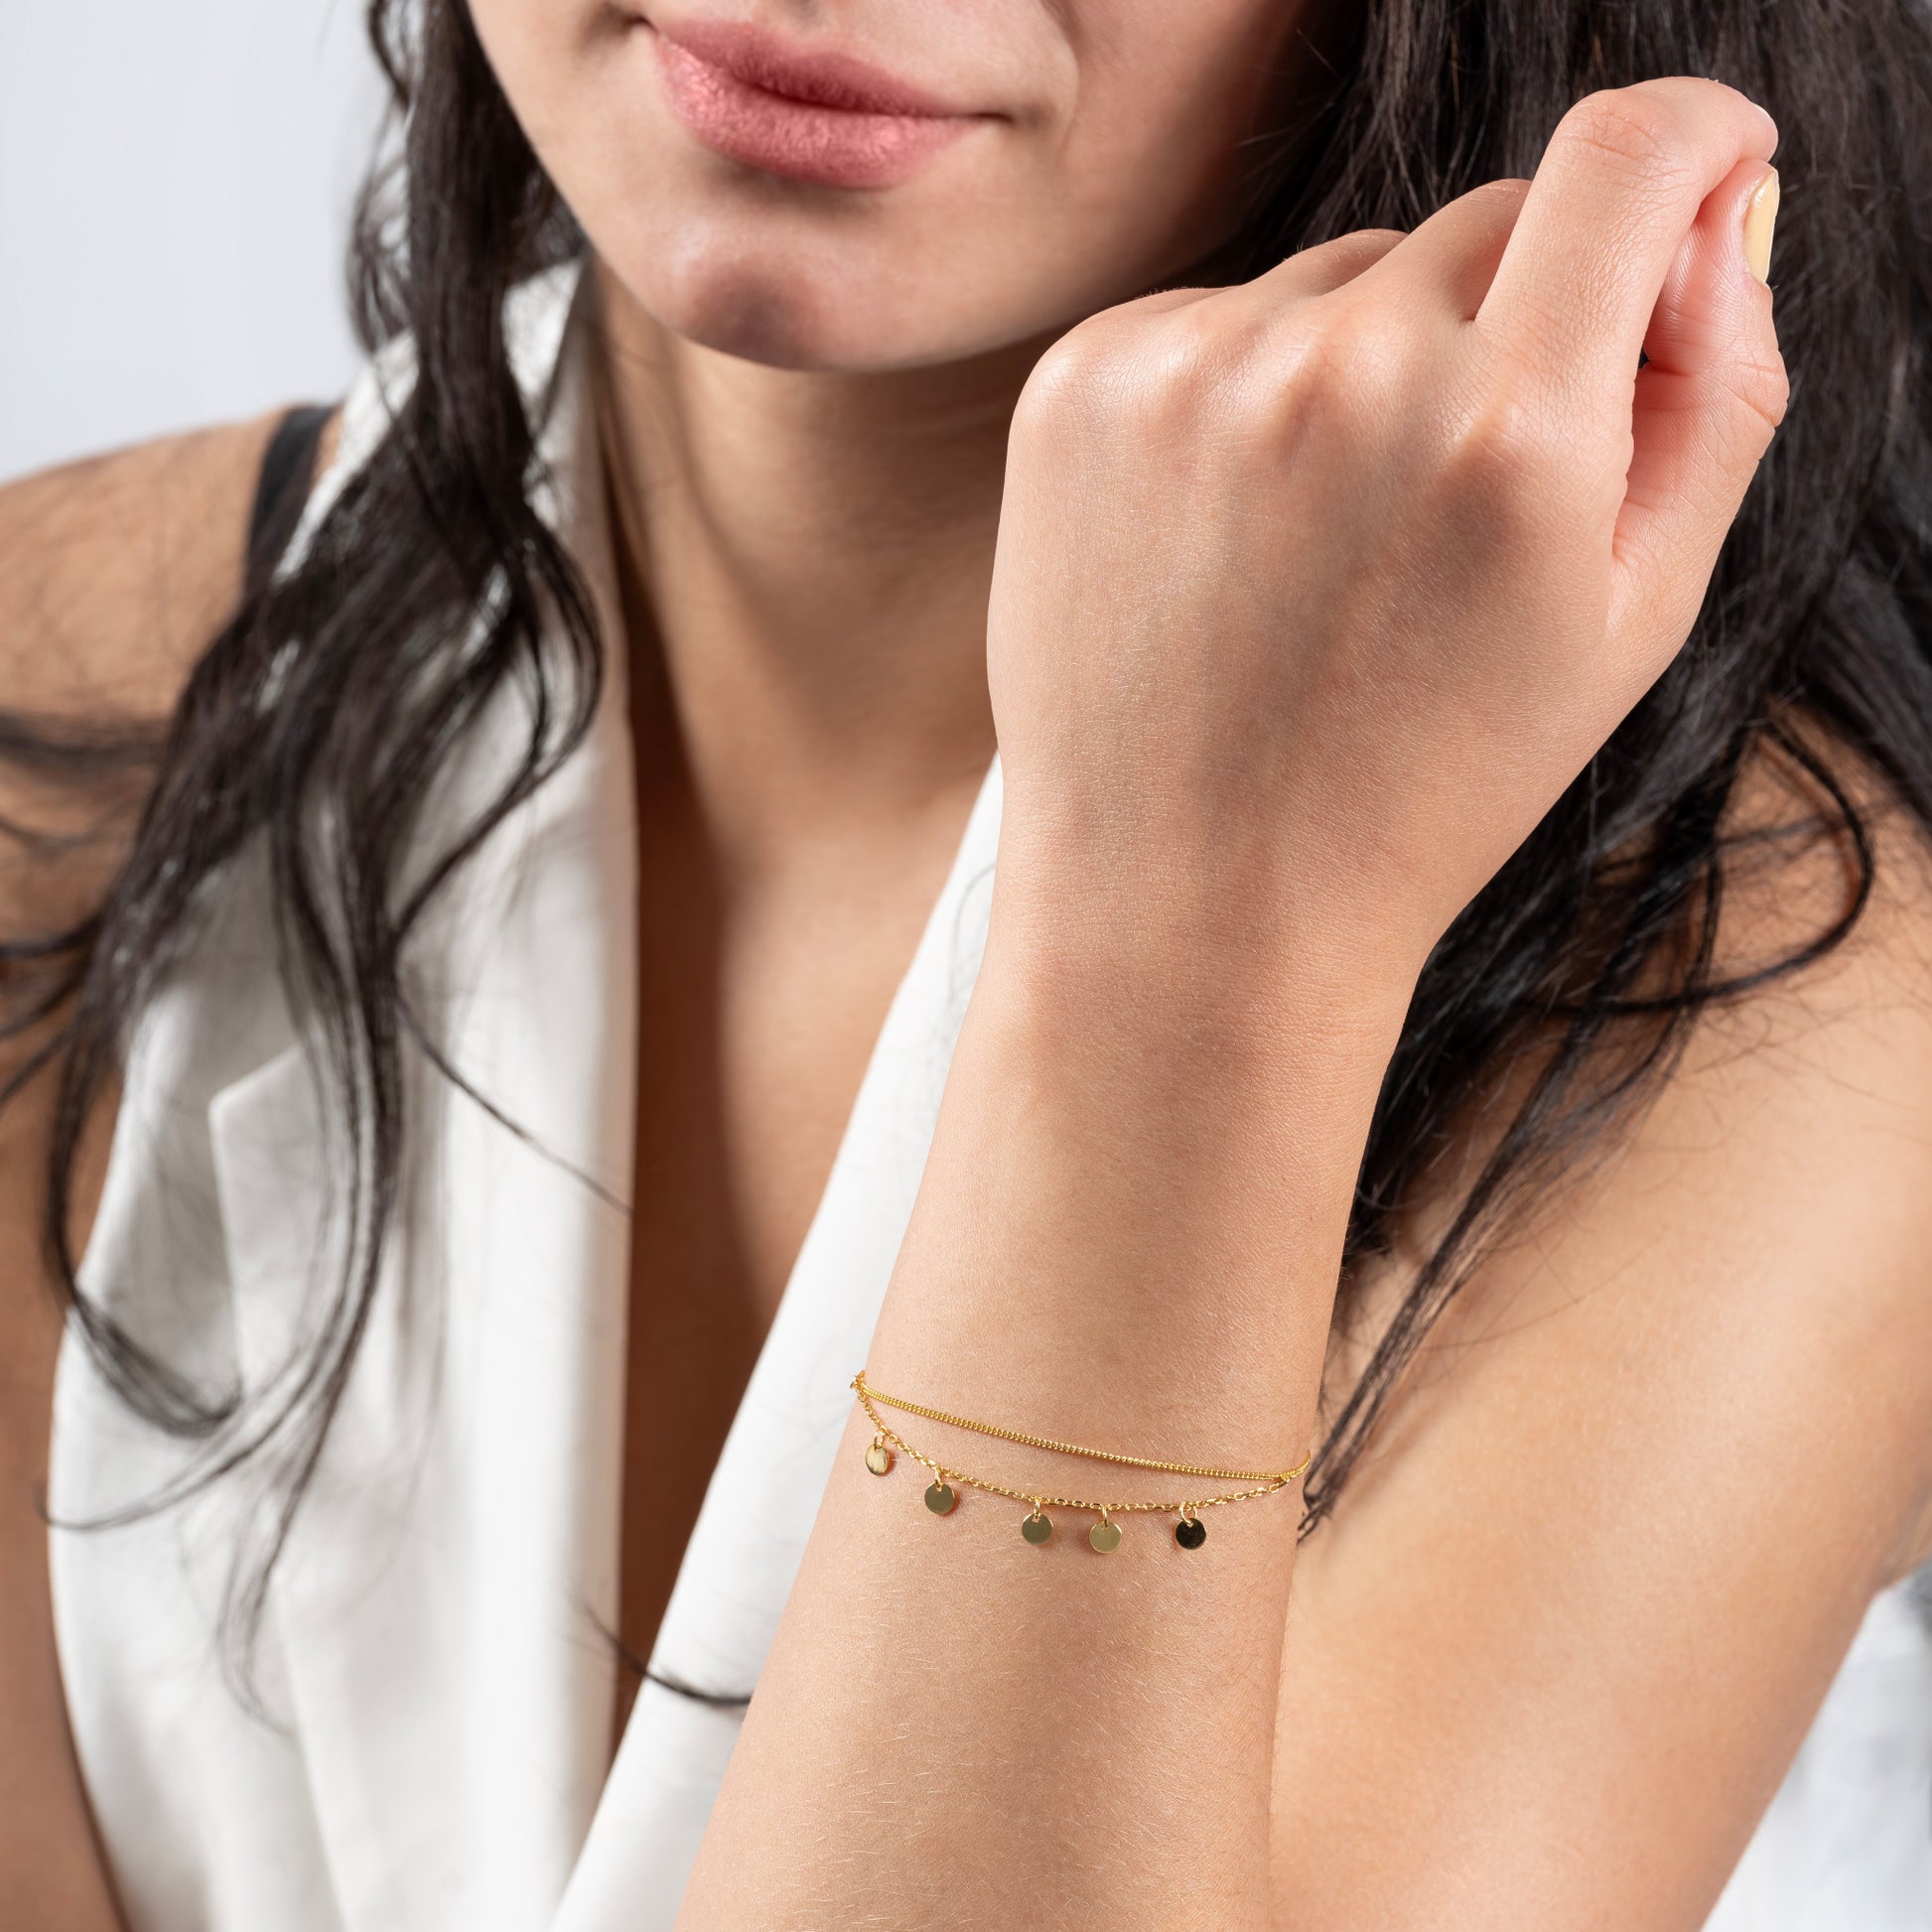 A model wearing Disc Pendant Gold Bracelet on her hand.